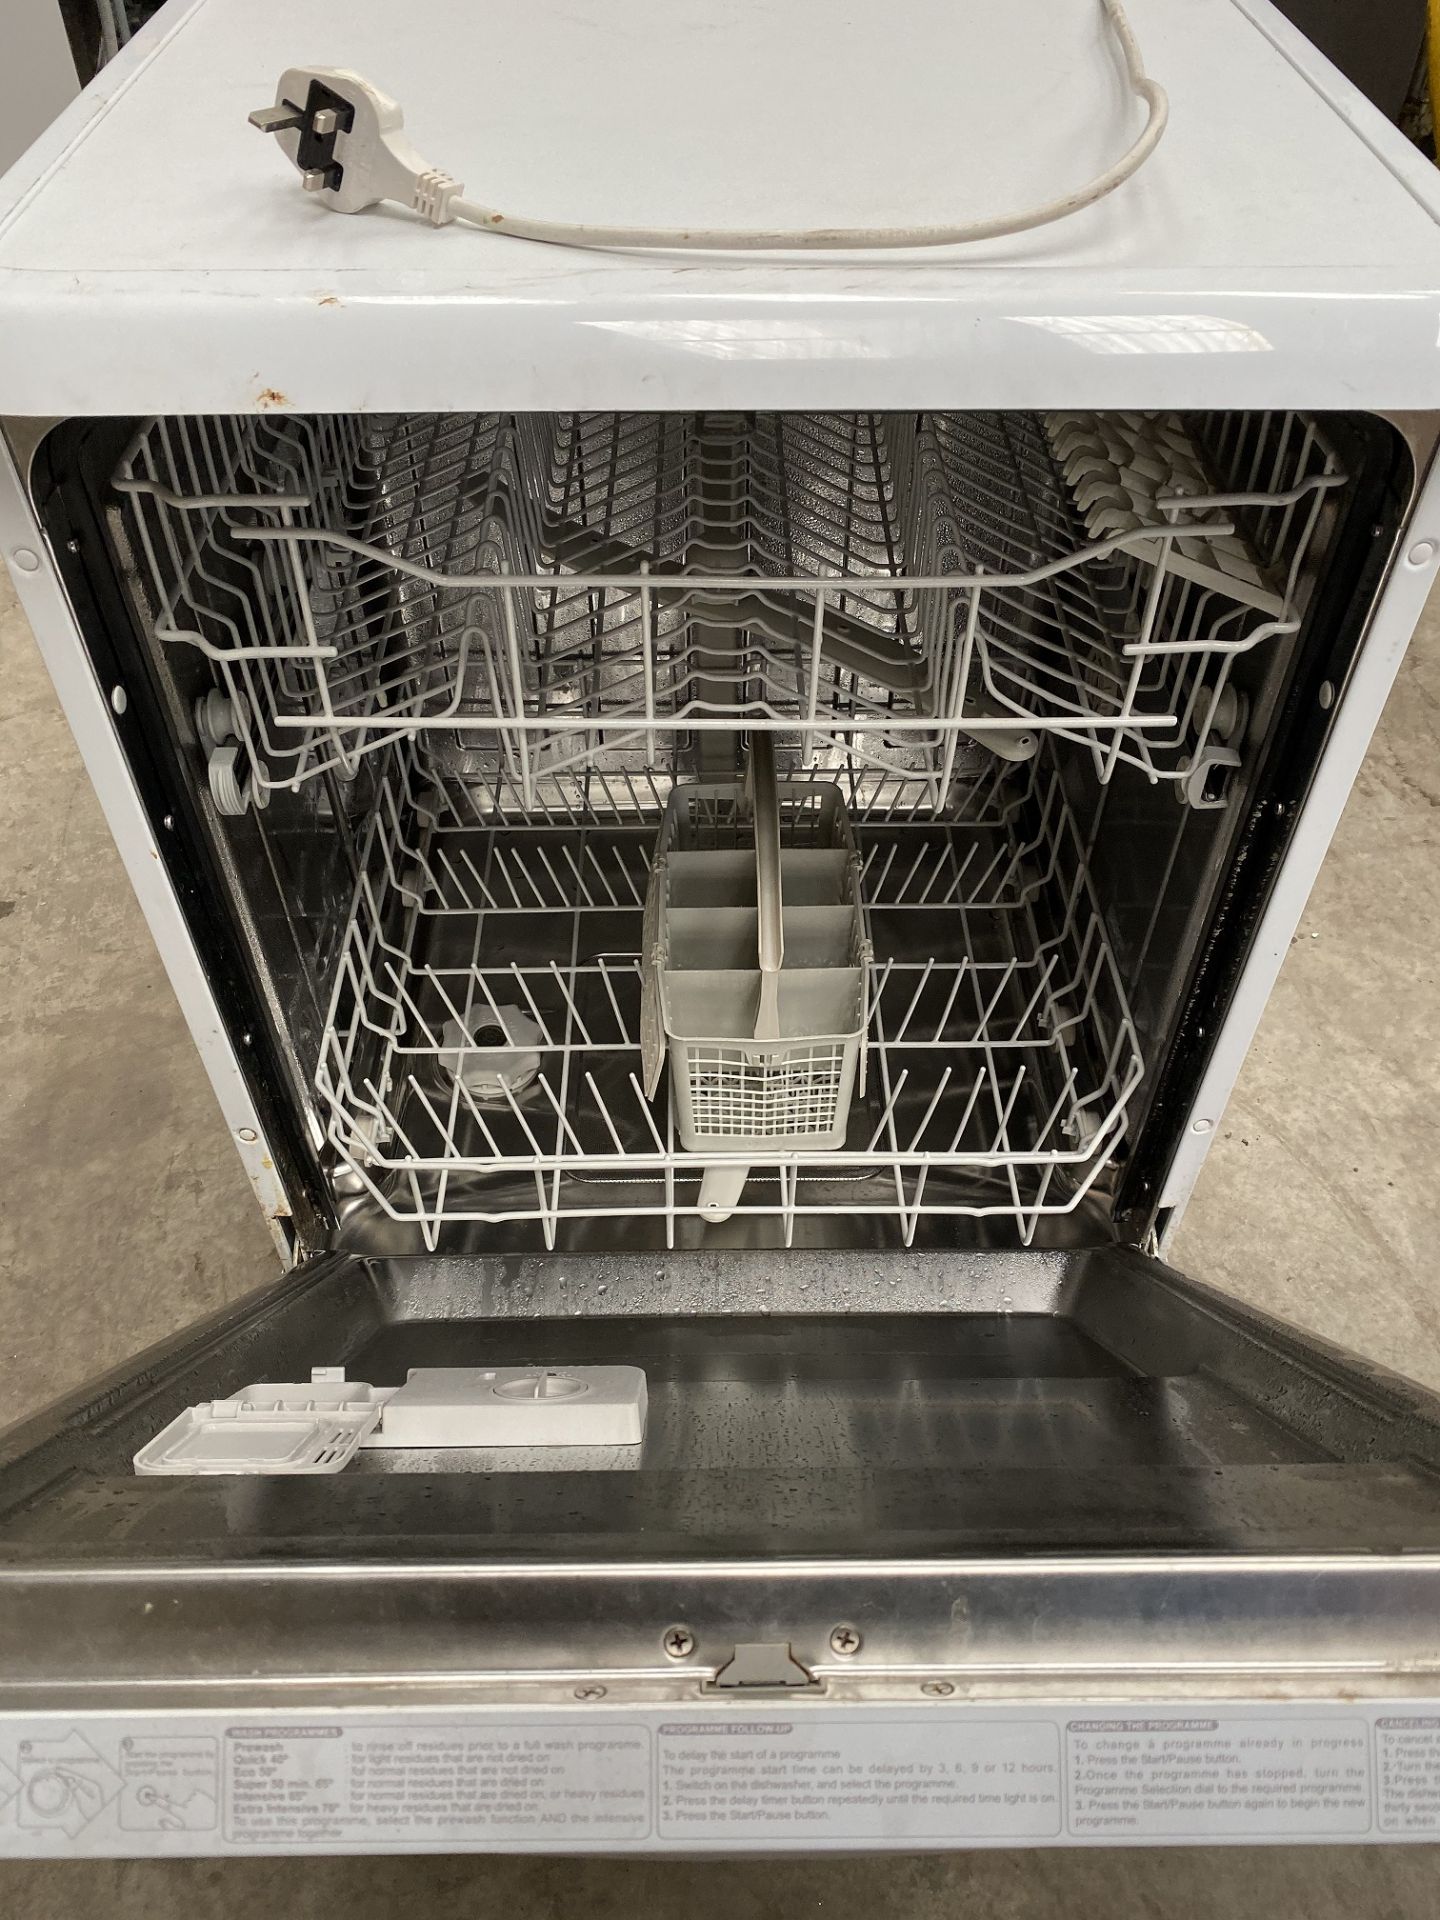 CDA Dishwasher - Image 2 of 2